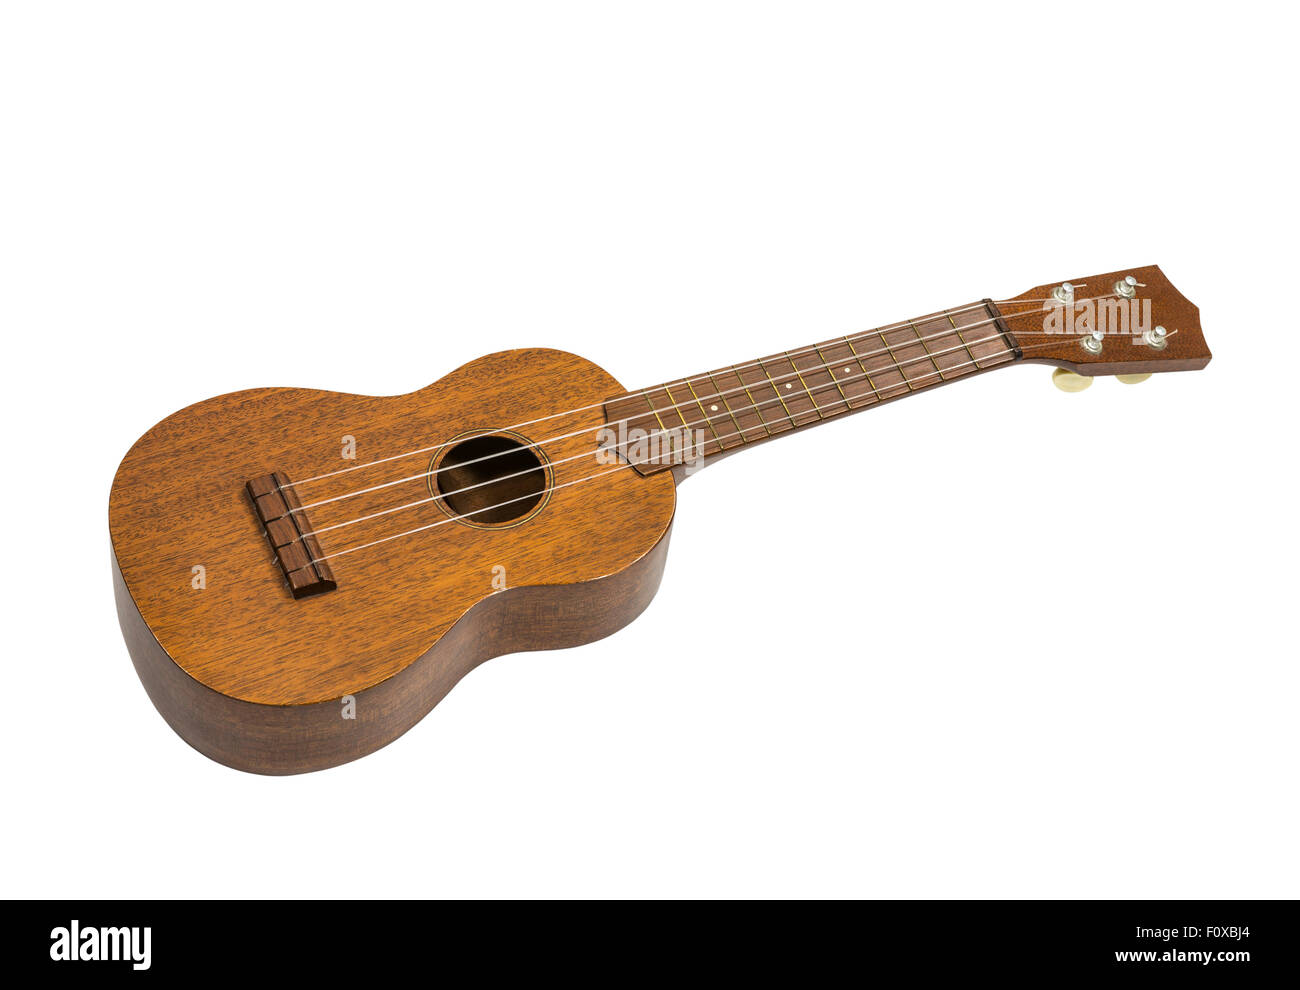 Toy guitar ukulele isolated with clipping path. Stock Photo